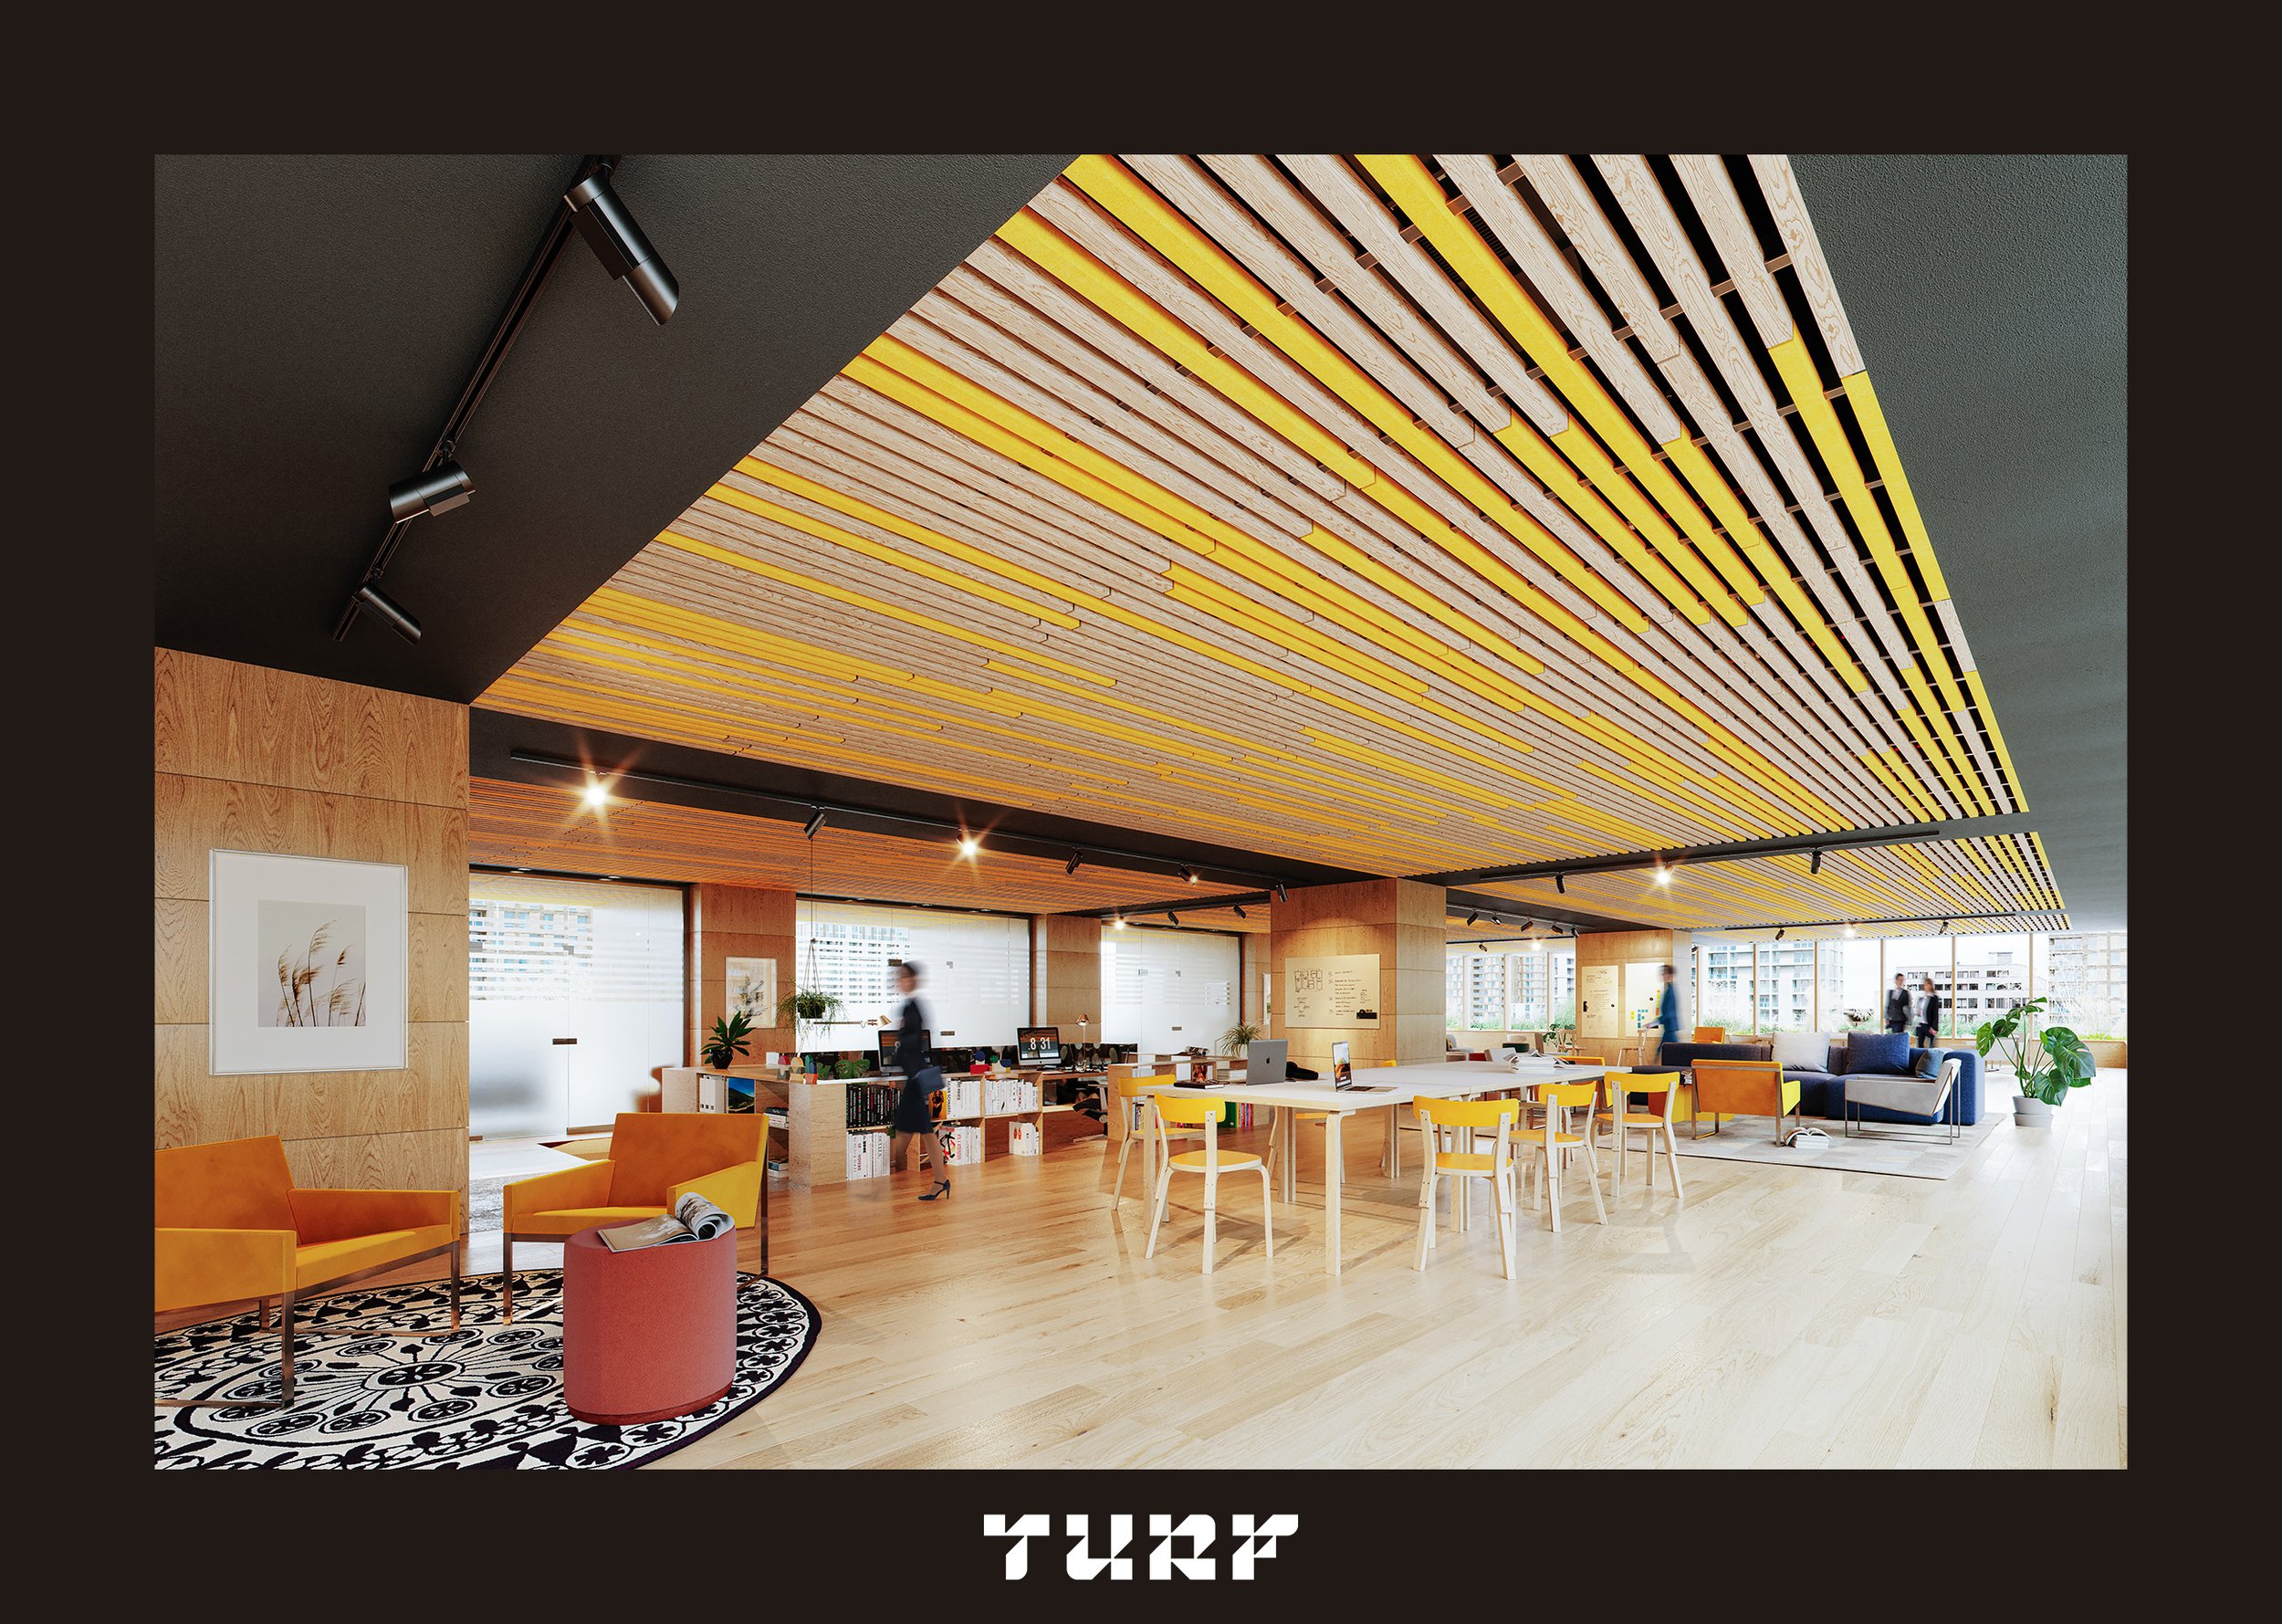   PRODUCT* TURF design (US)  Arbor ceiling baffle images: © imperfct* 